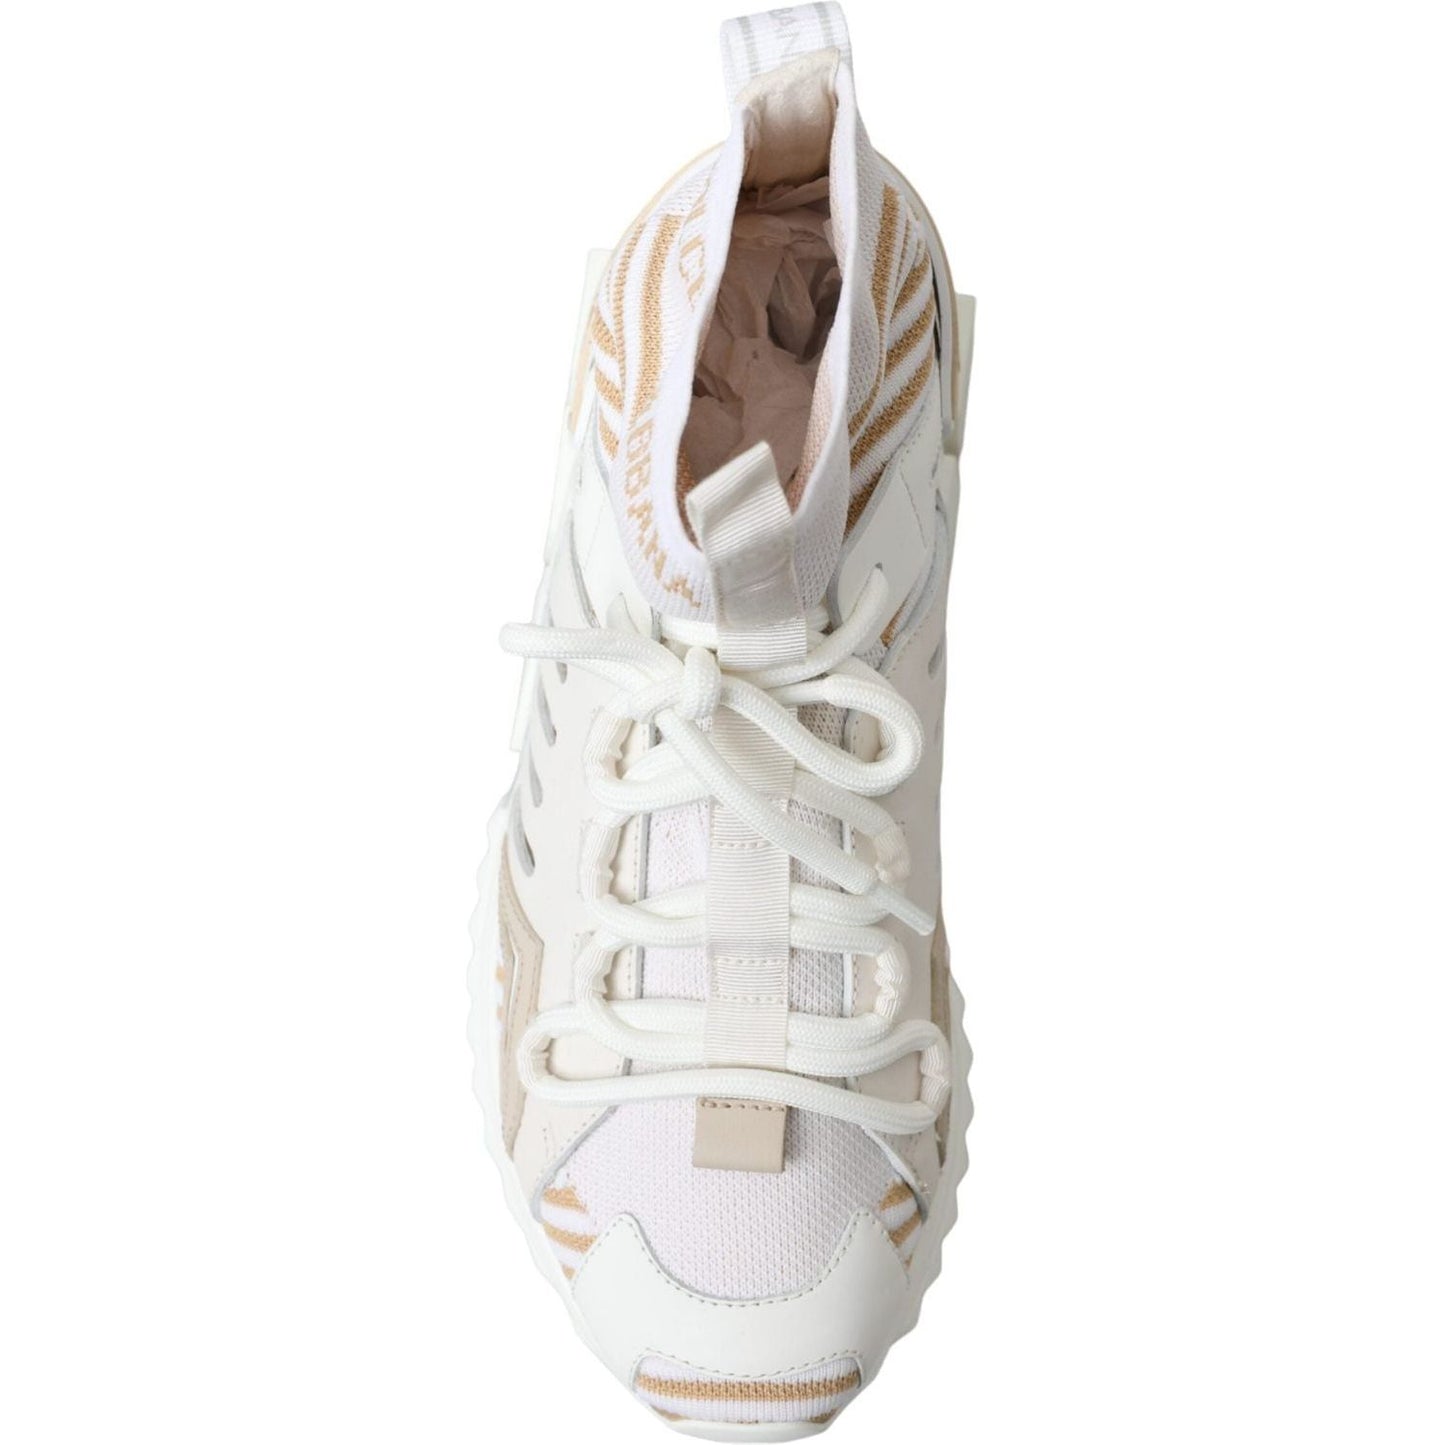 Dolce & Gabbana Elegant Sorrento Slip-On Sneakers in White and Beige white-beige-sorrento-socks-sneakers-shoes-1 465A2452-BG-scaled-b7393d8b-702.jpg